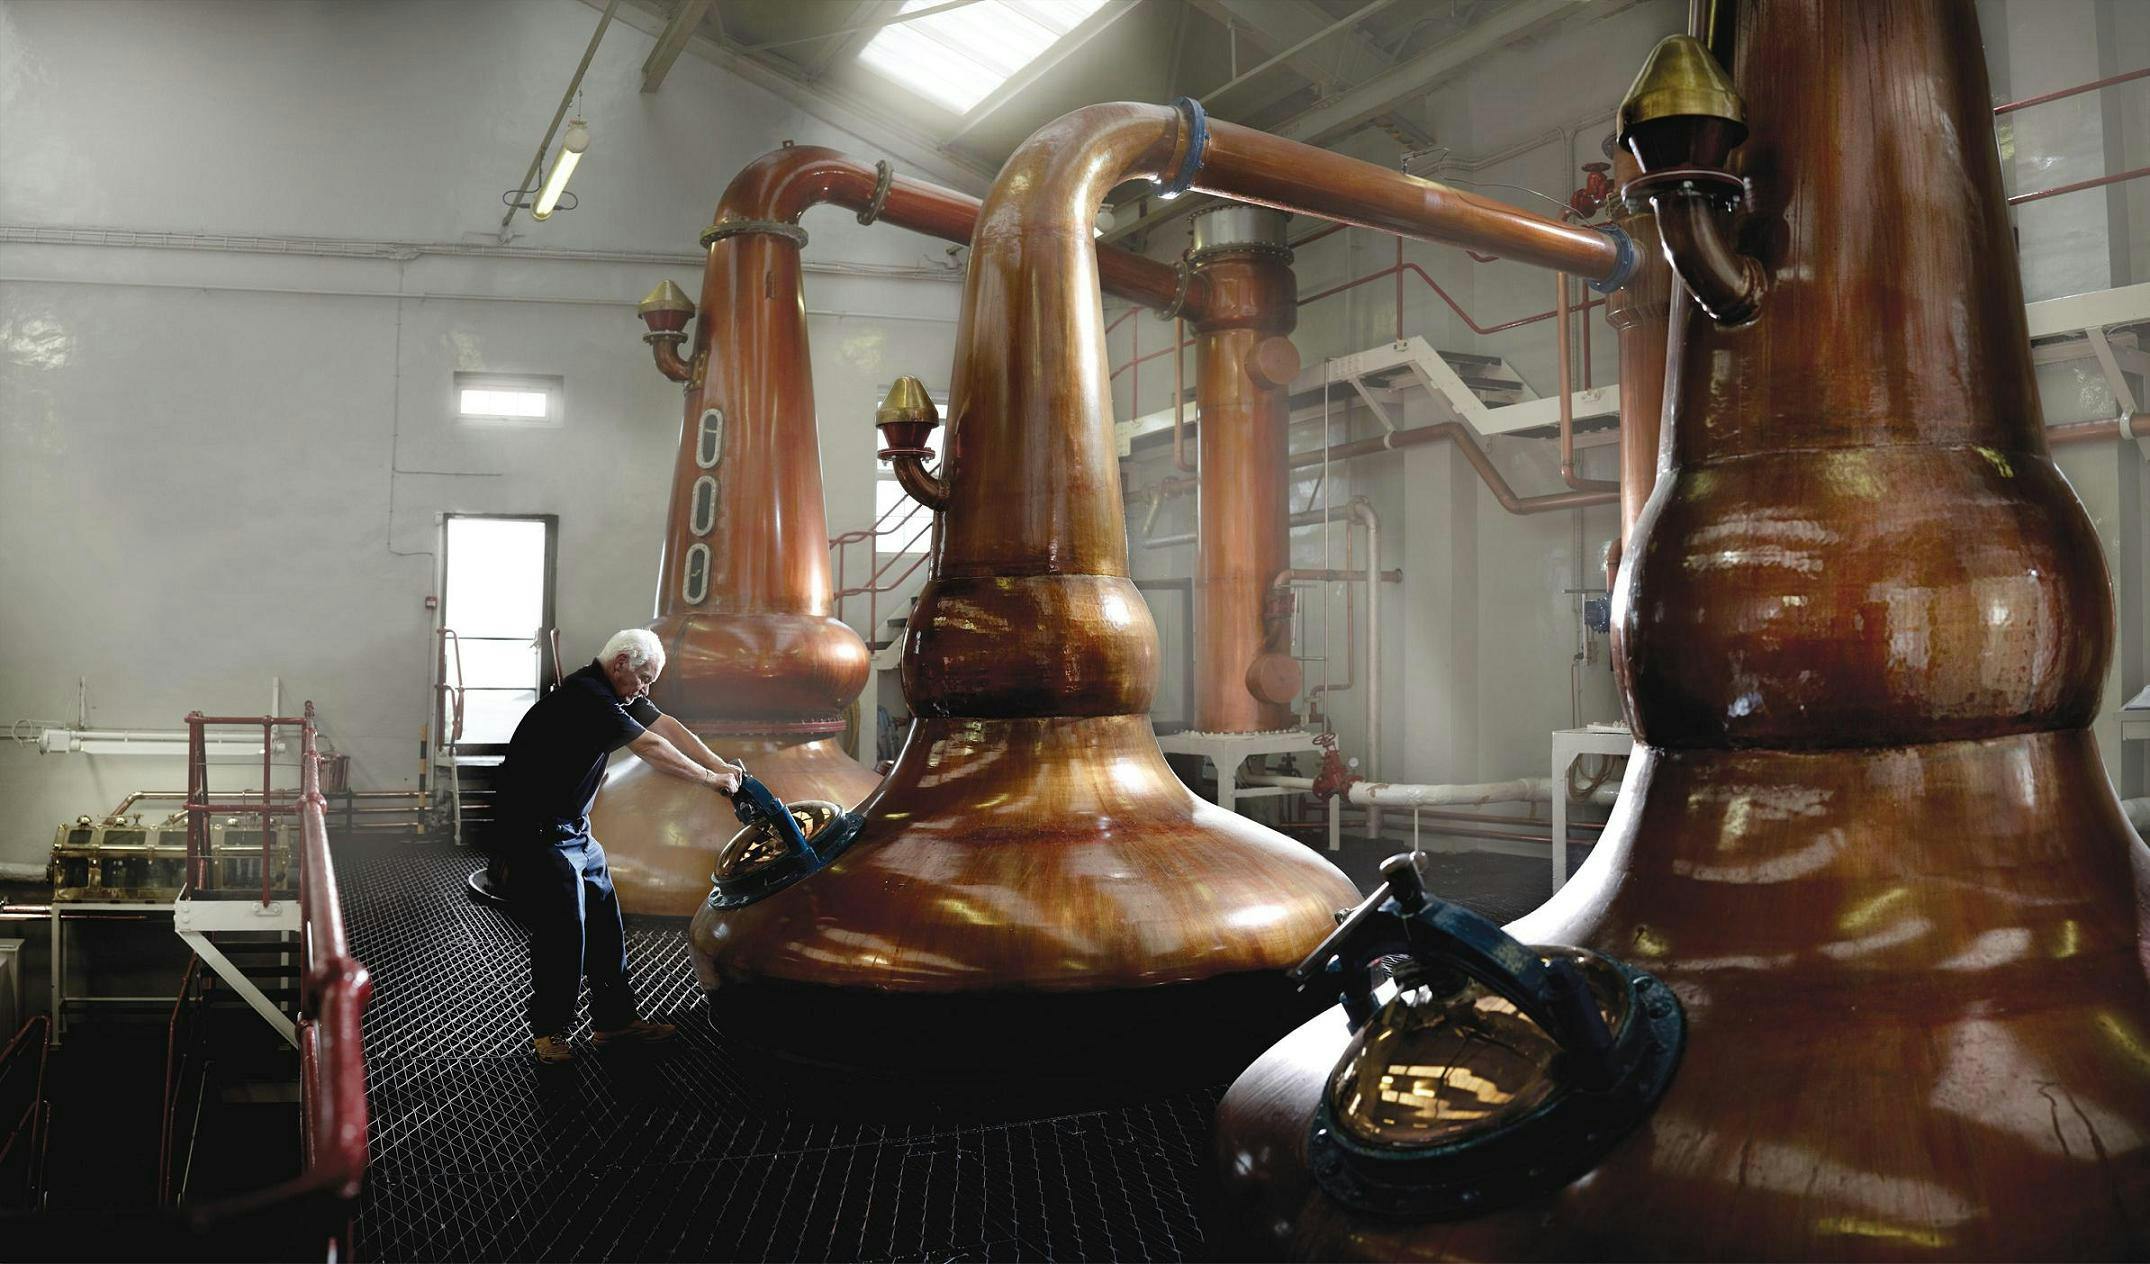 Copy of Glengoyne Distillery Stillhouse 2014.JPG